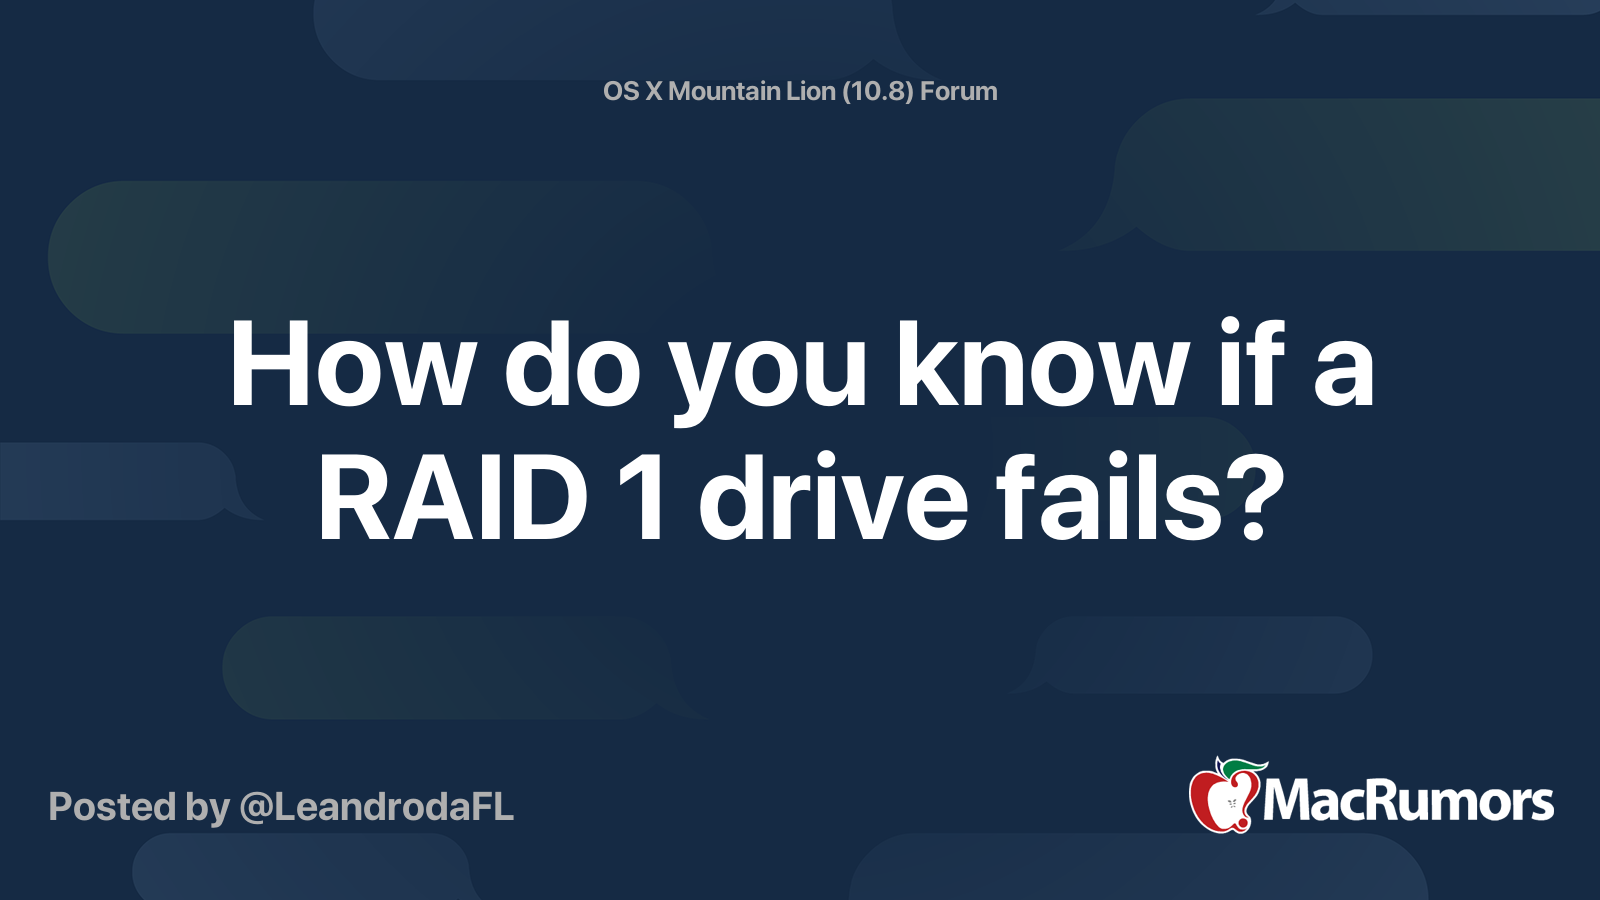 What happens if 1 drive fails in RAID 1?